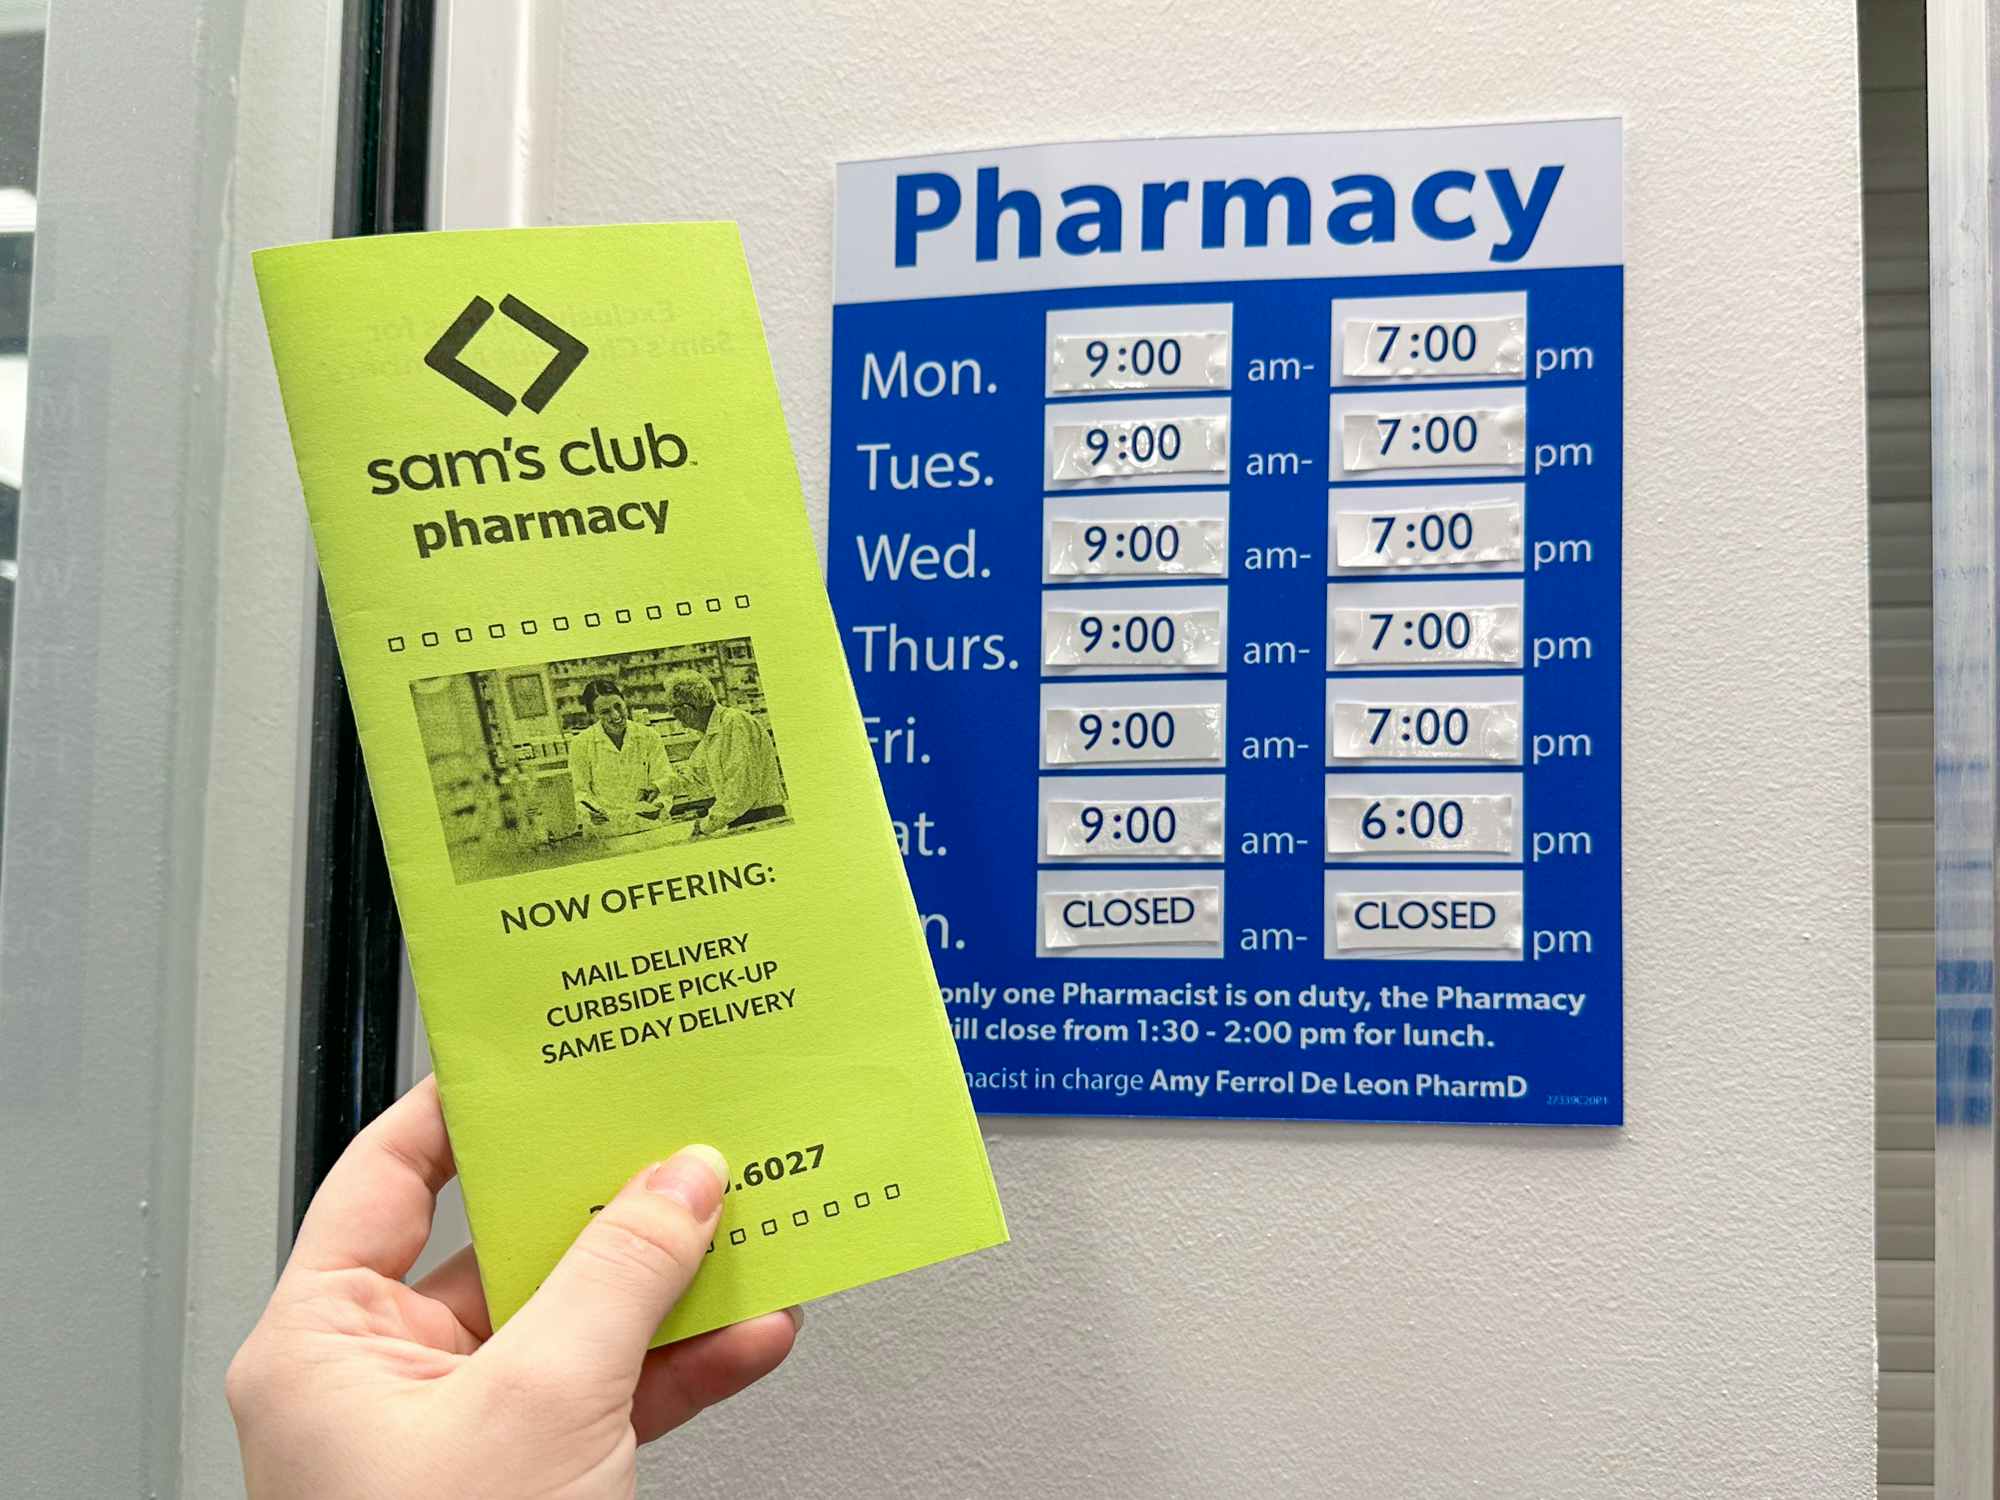 Membership Services - Sam's Club